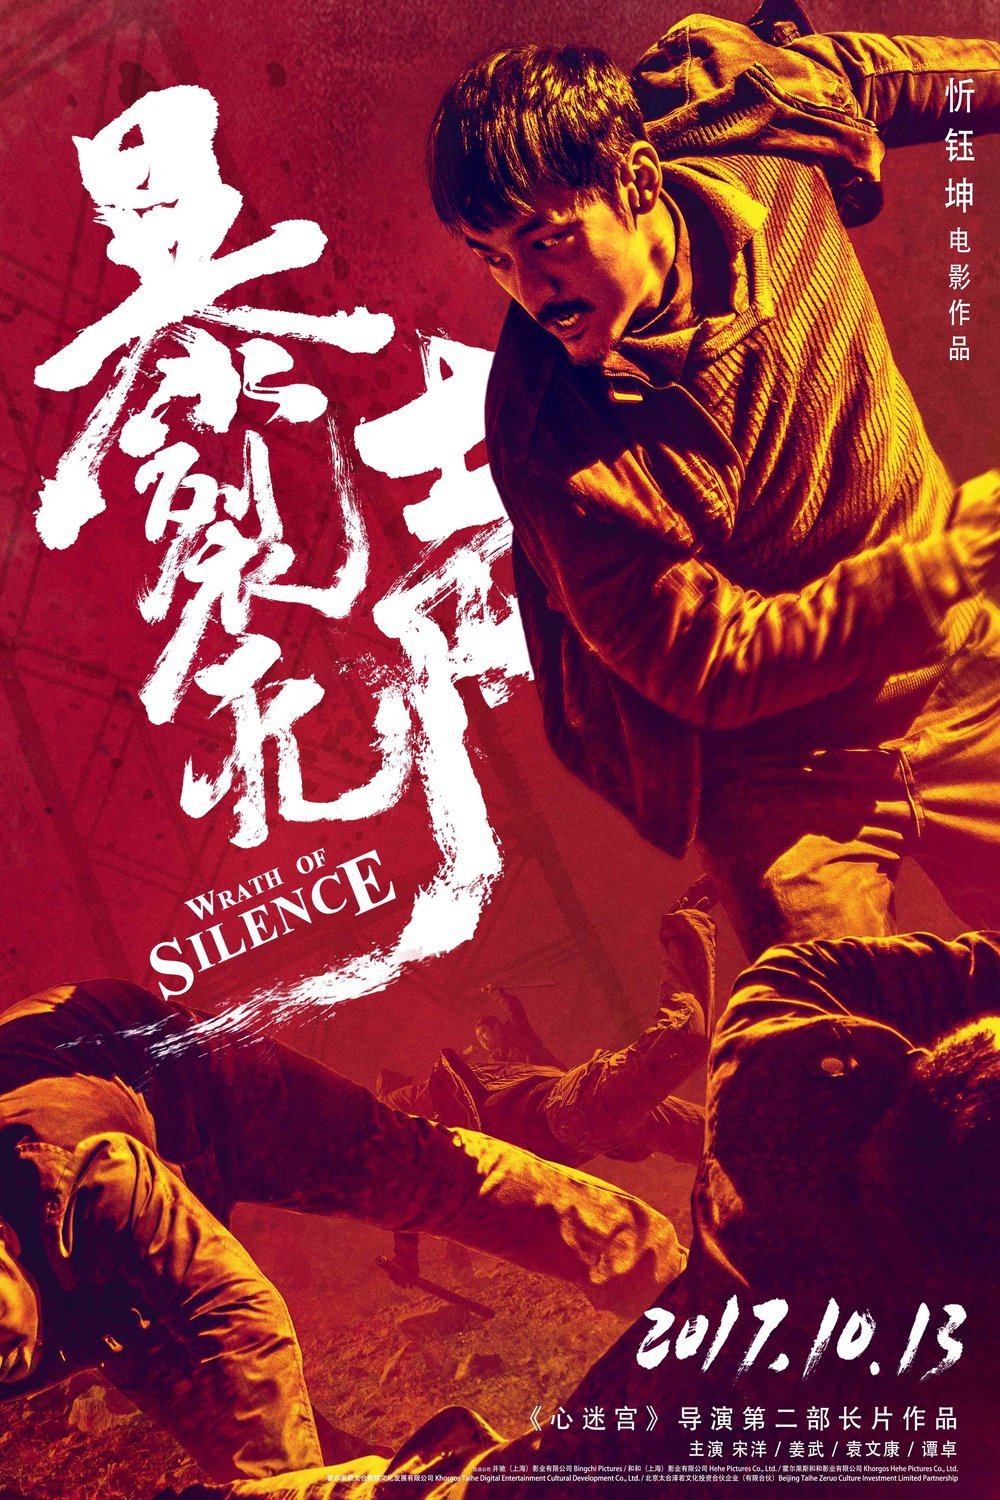 L'affiche originale du film Wrath of Silence en mandarin